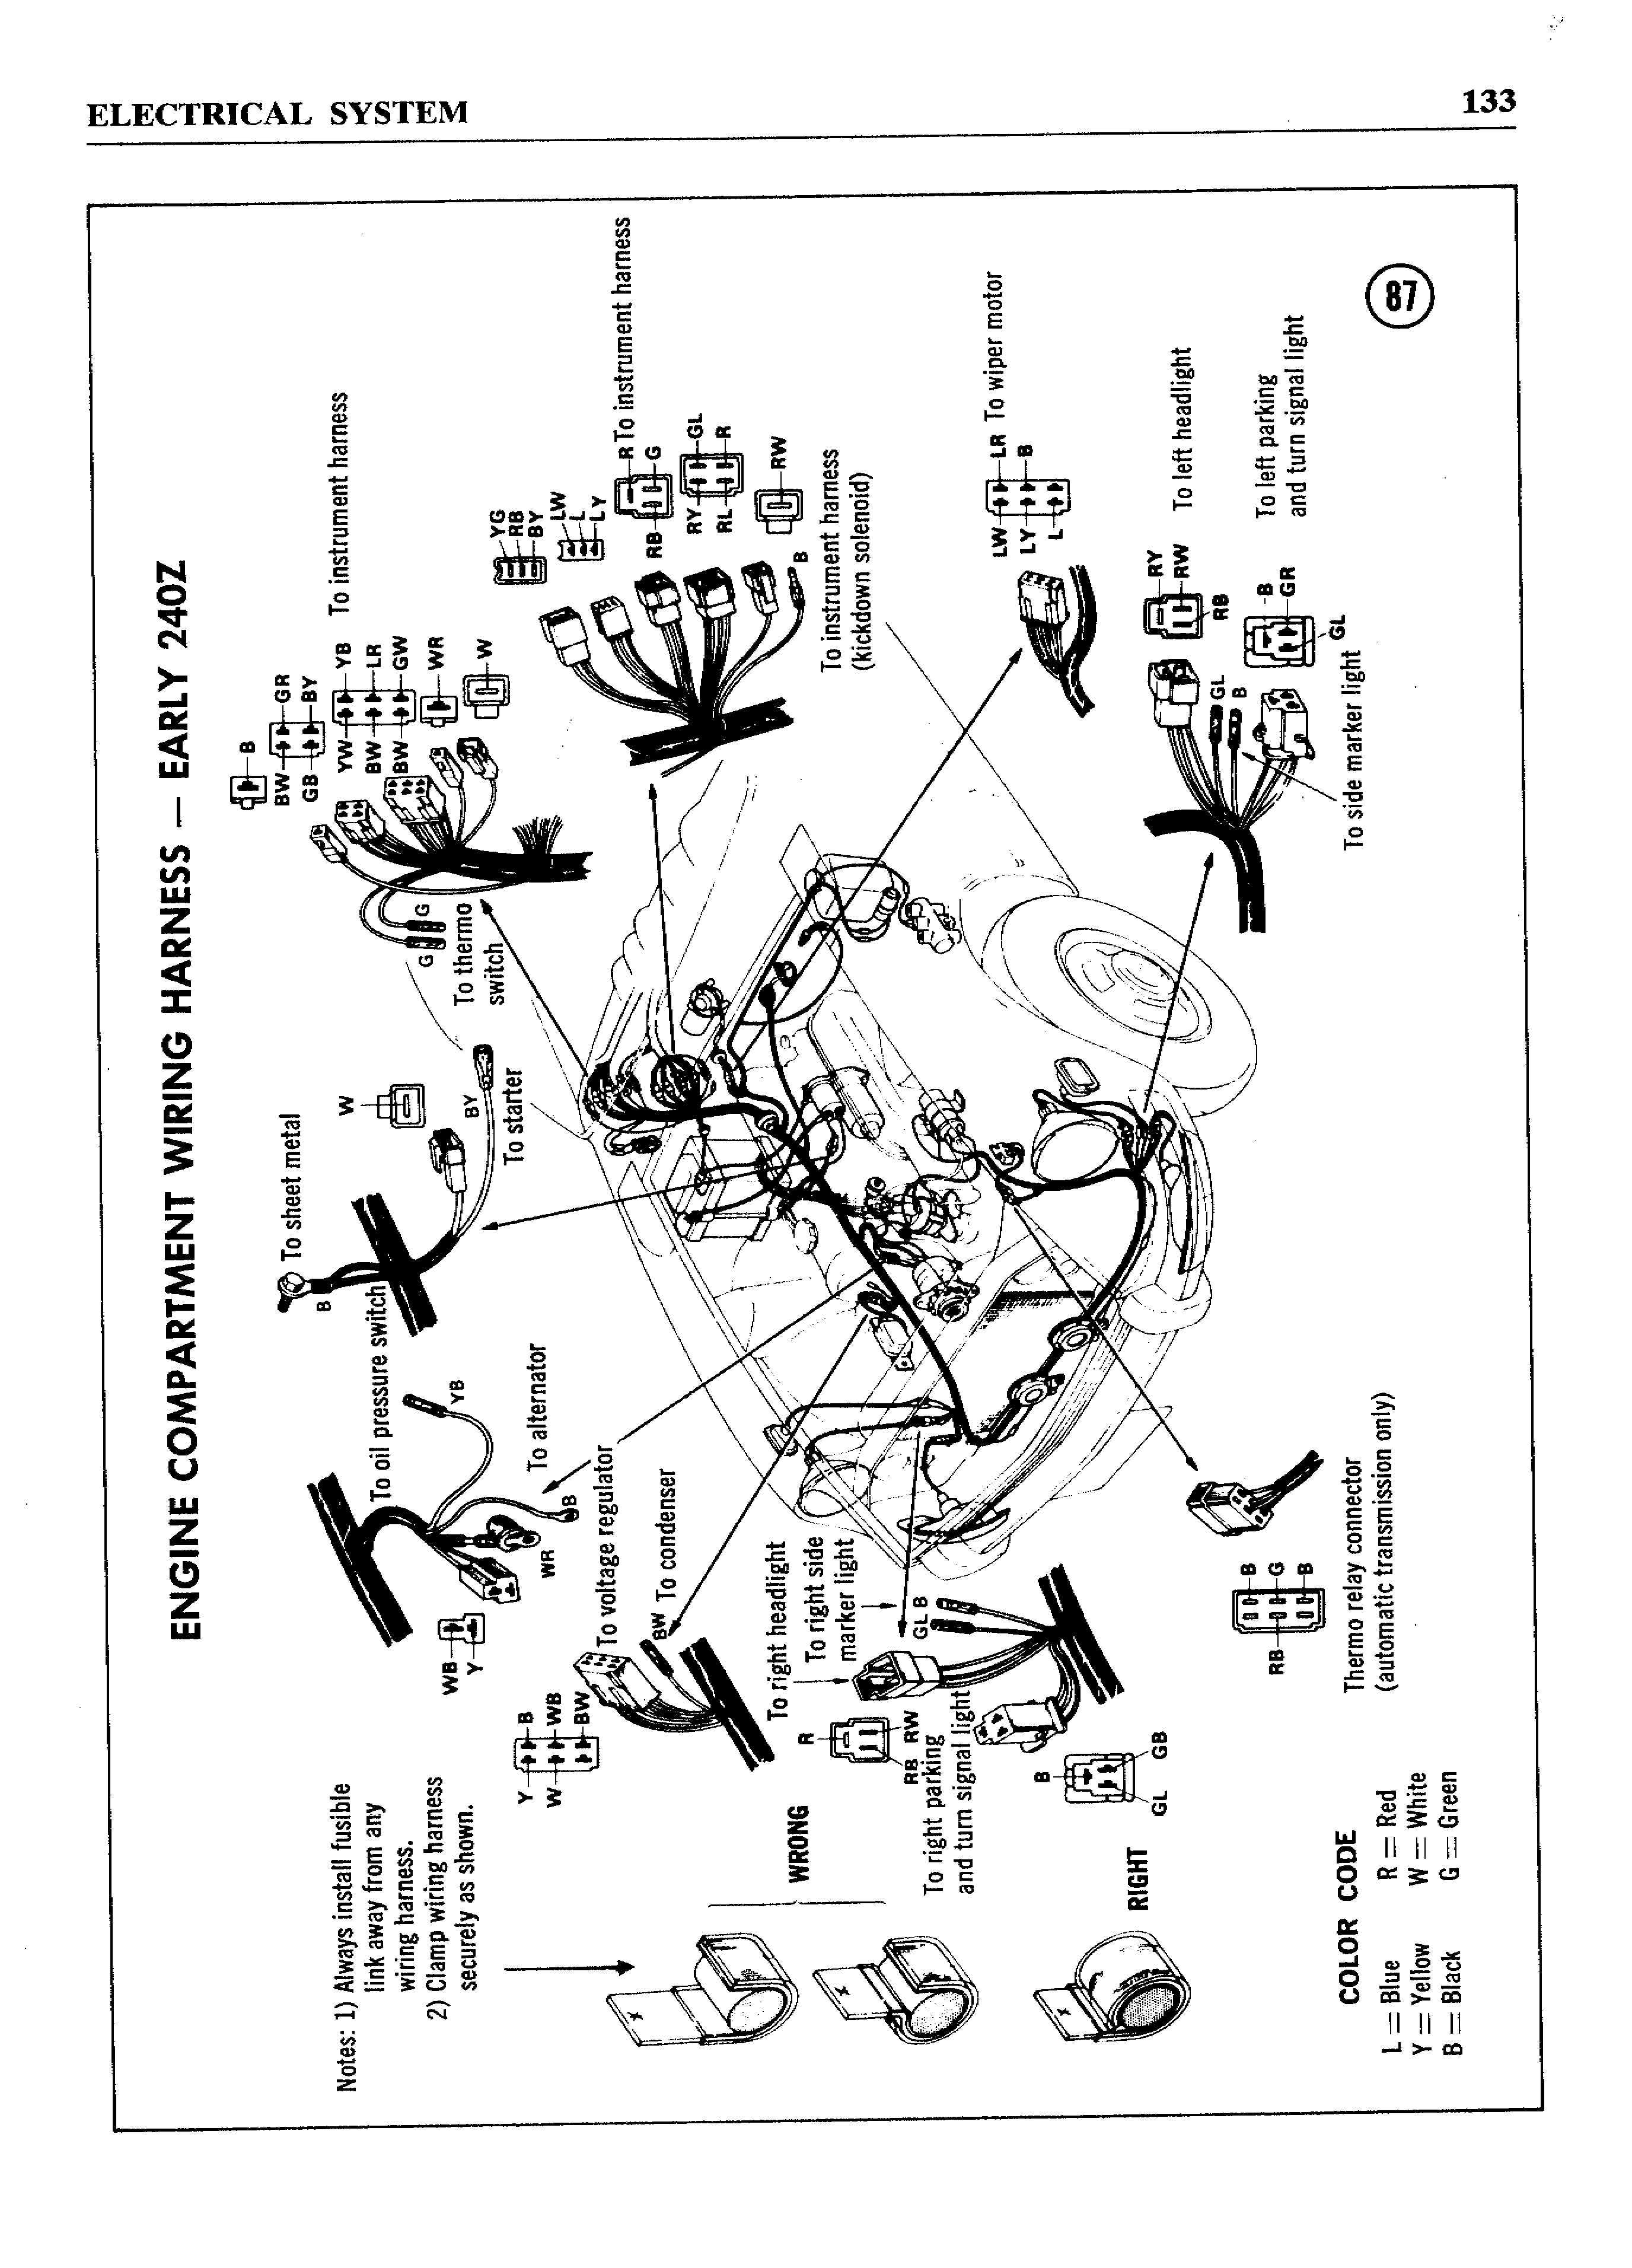 1973 datsun 620 wiring diagram